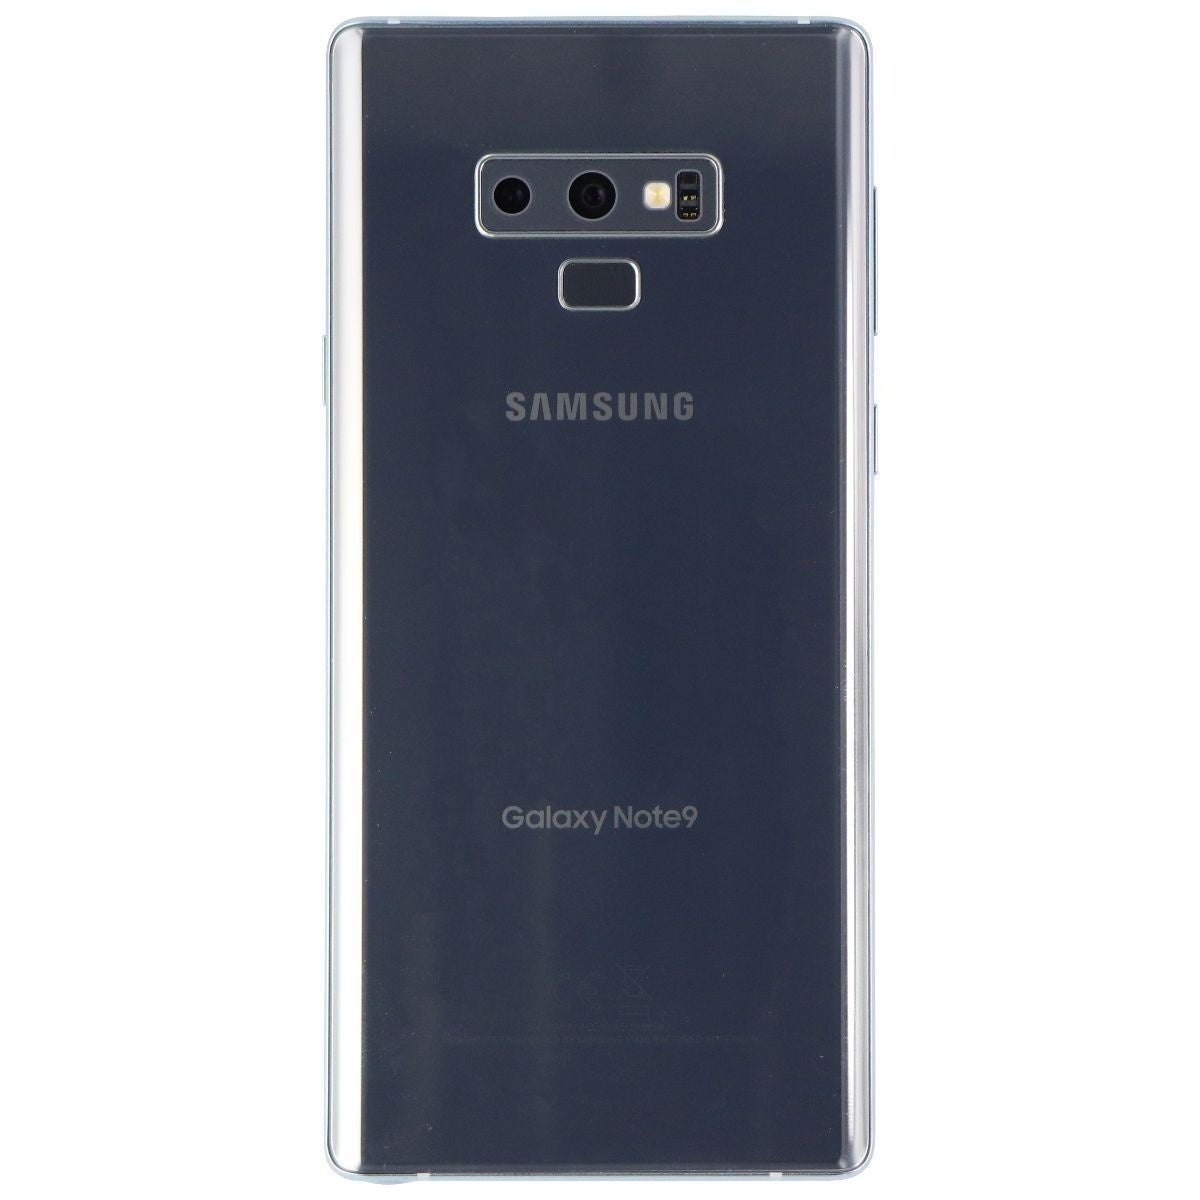 Samsung Galaxy Note9 (6.4-inch) SM-N960U (GSM + CDMA) - 512GB/Cloud Silver Cell Phones & Smartphones Samsung    - Simple Cell Bulk Wholesale Pricing - USA Seller